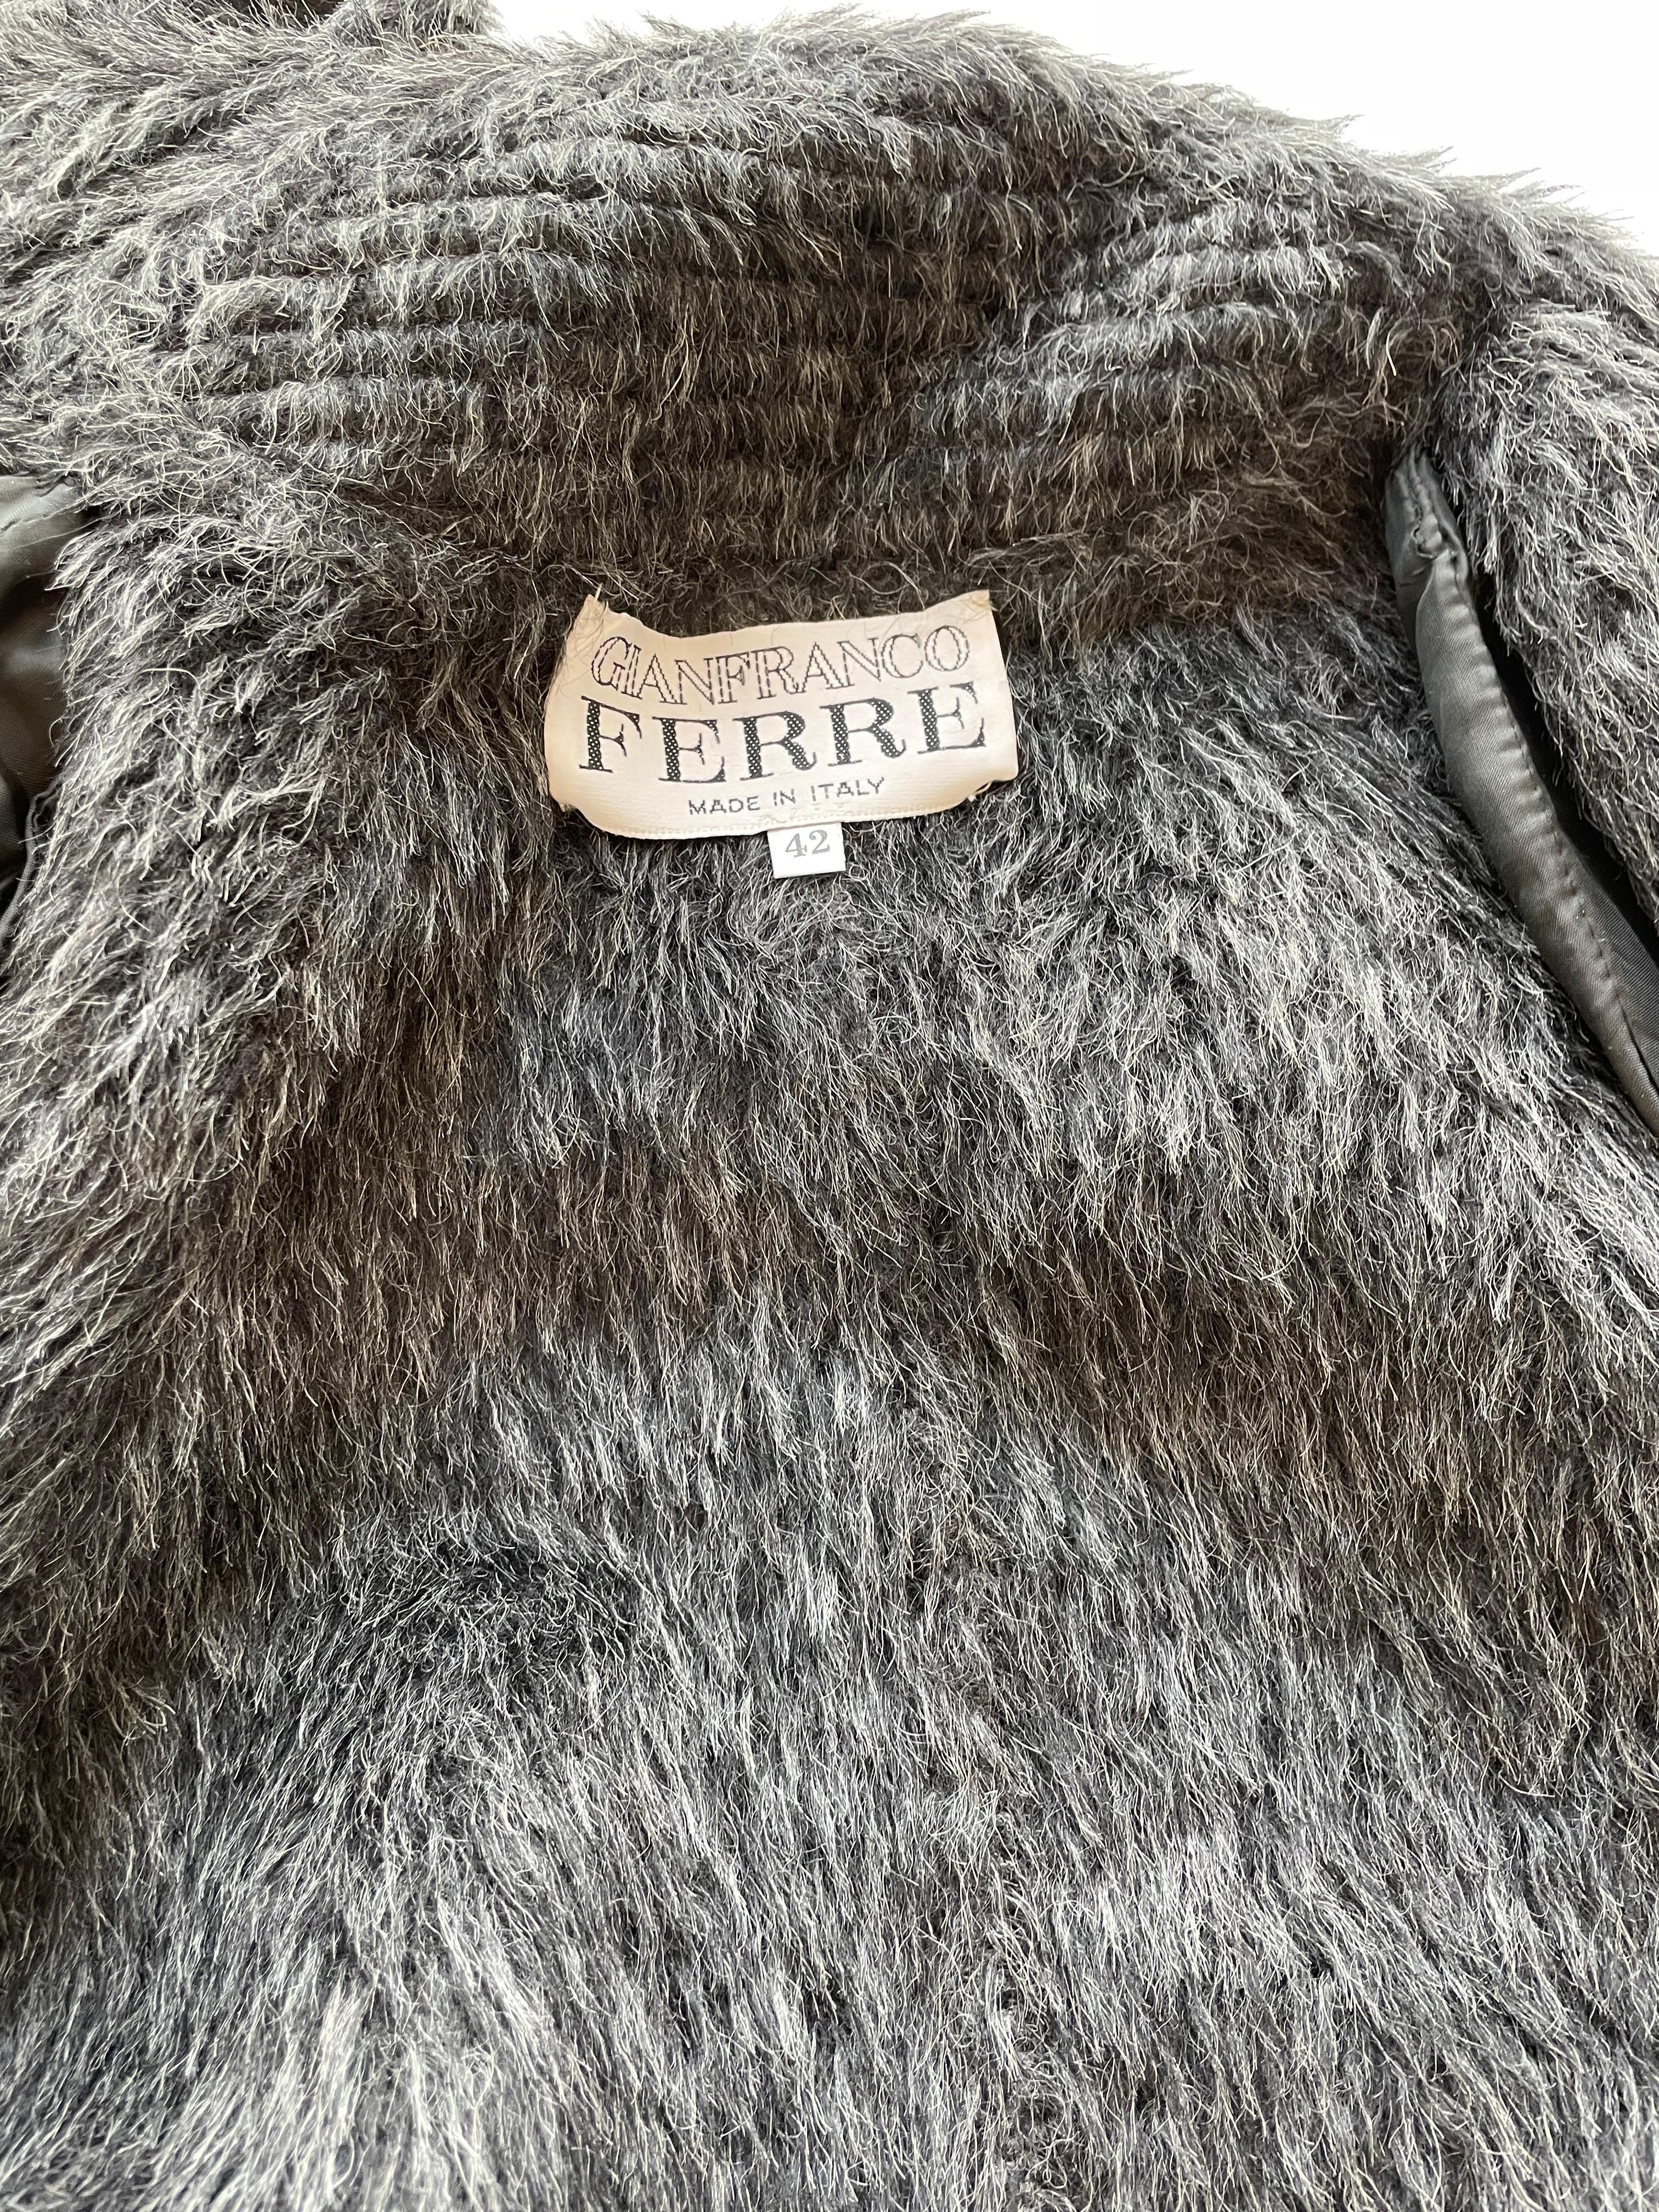 Gianfranco Ferré Alpaca and Wool Jacket For Sale 5